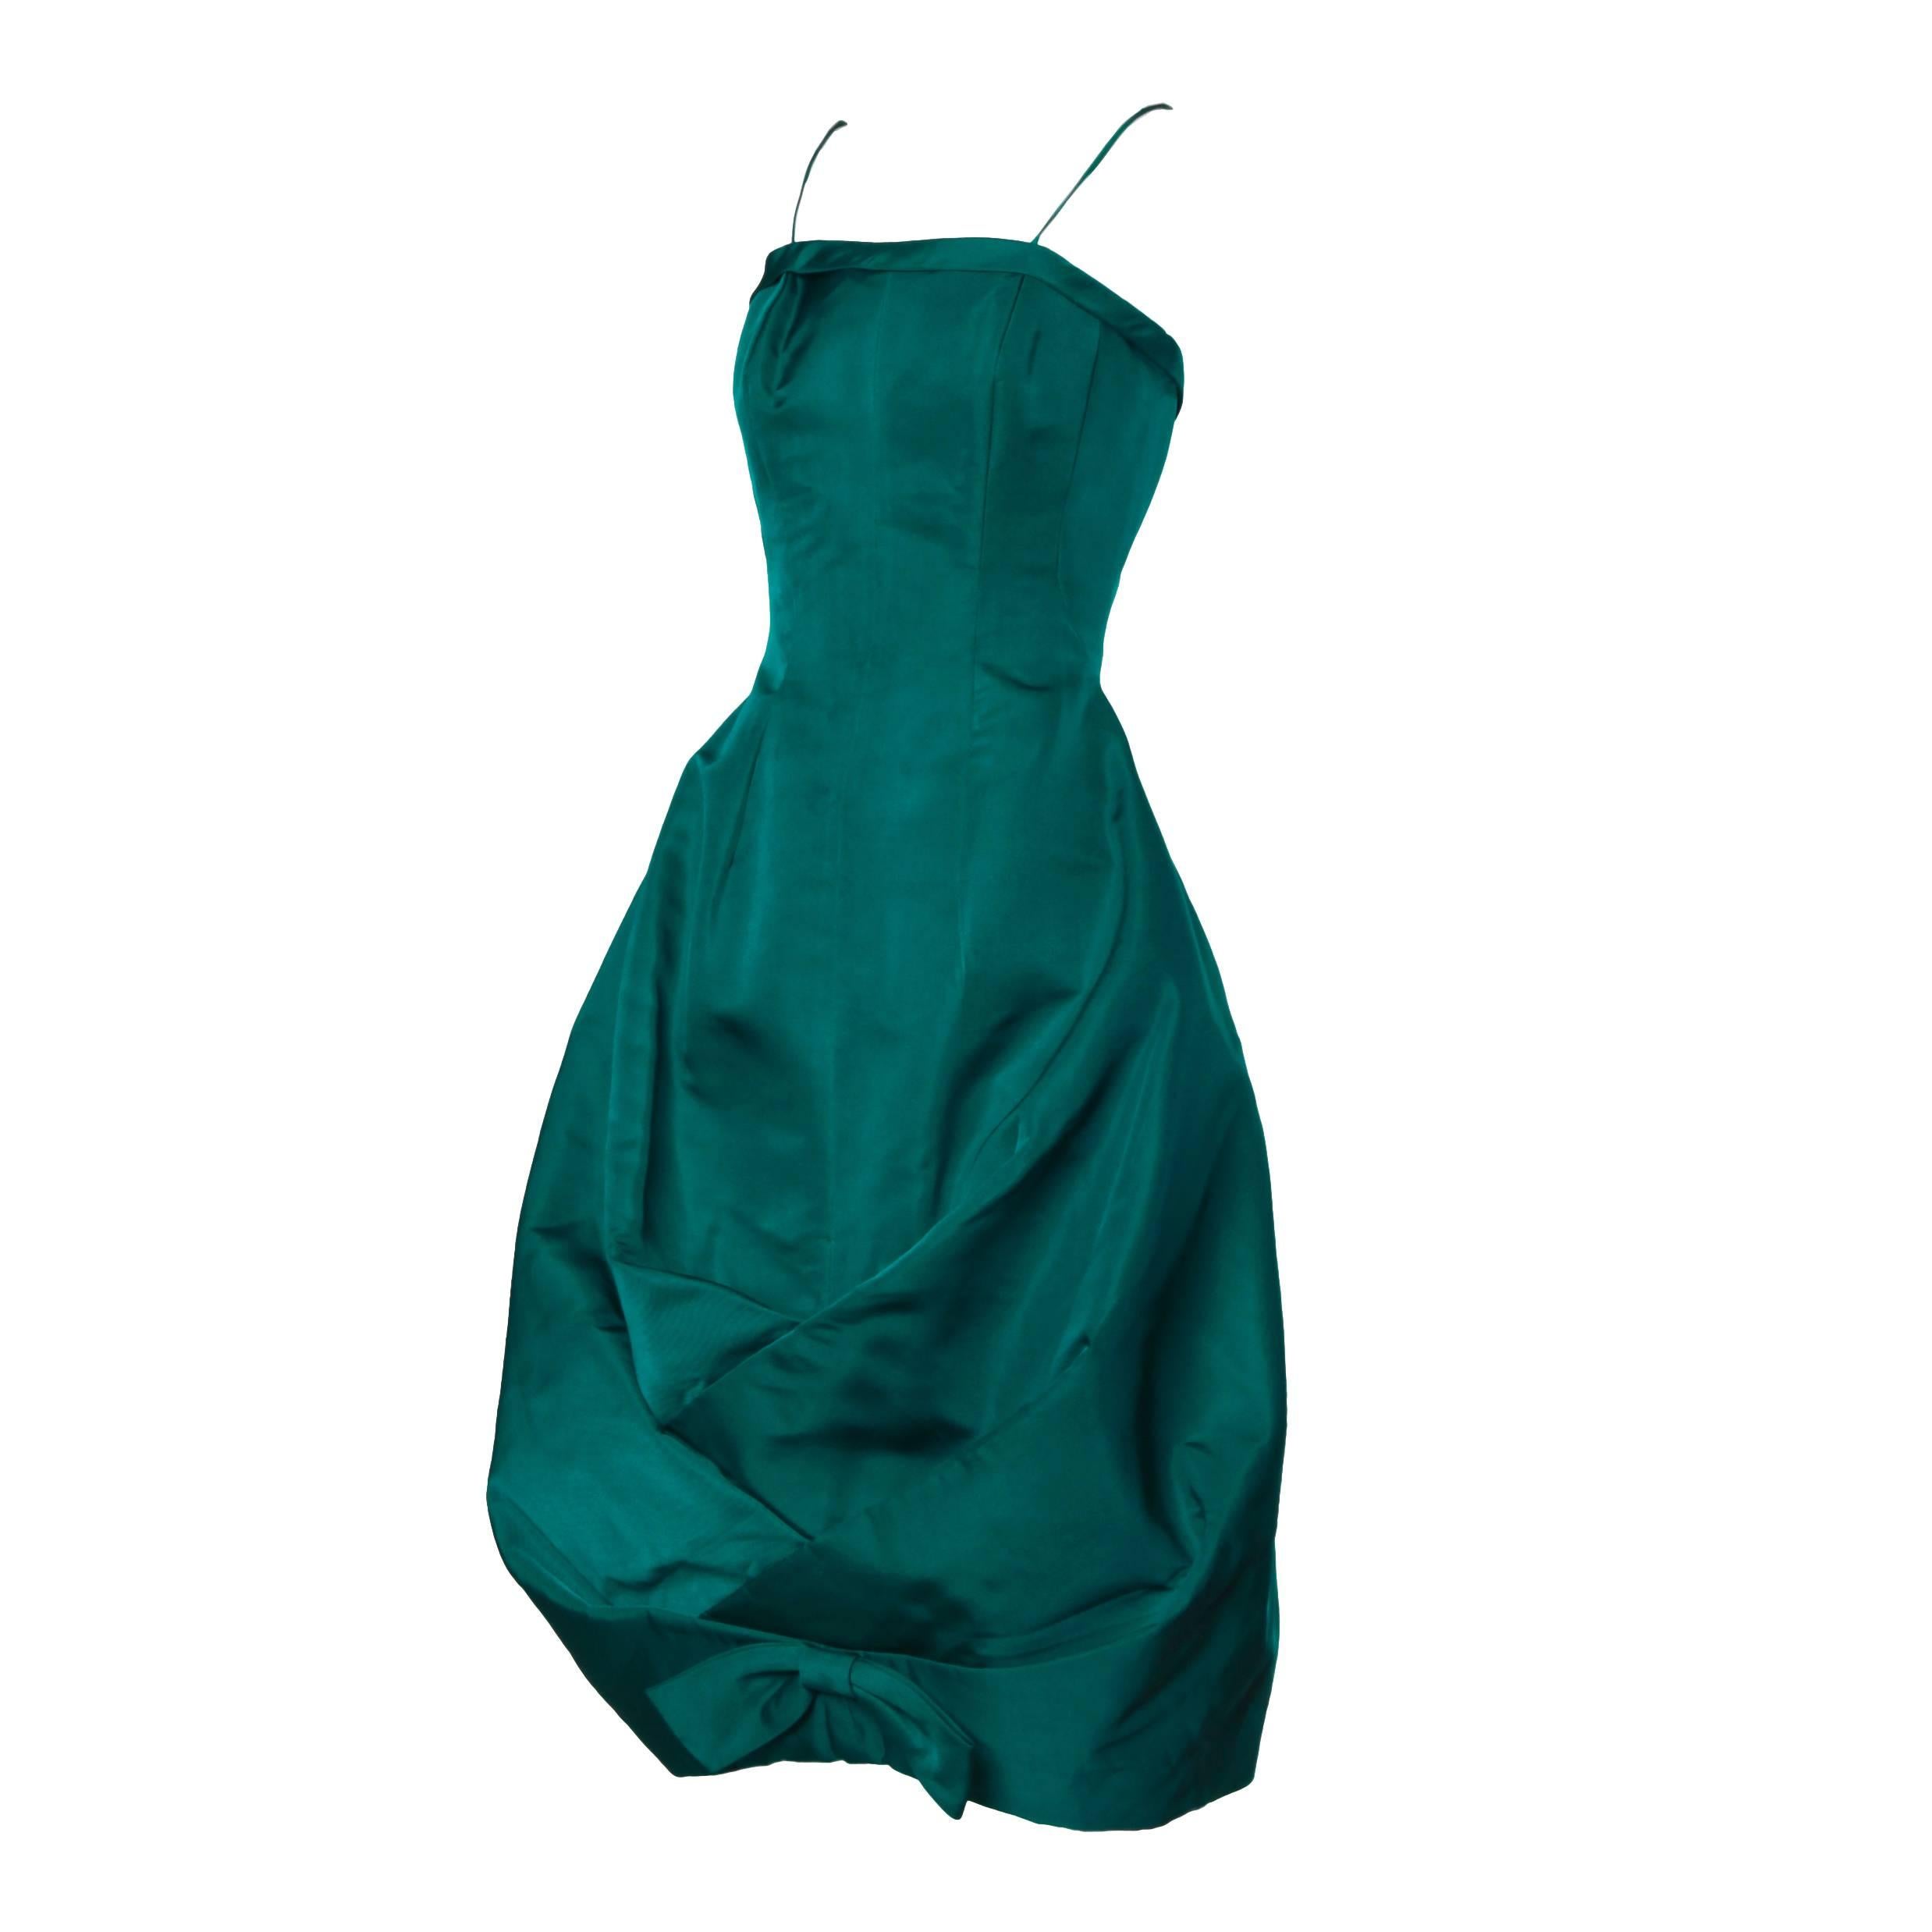 1950s Suzy Perette Vintage Green Silk Cocktail Dress with an Origami Bubble Hem (Grün)